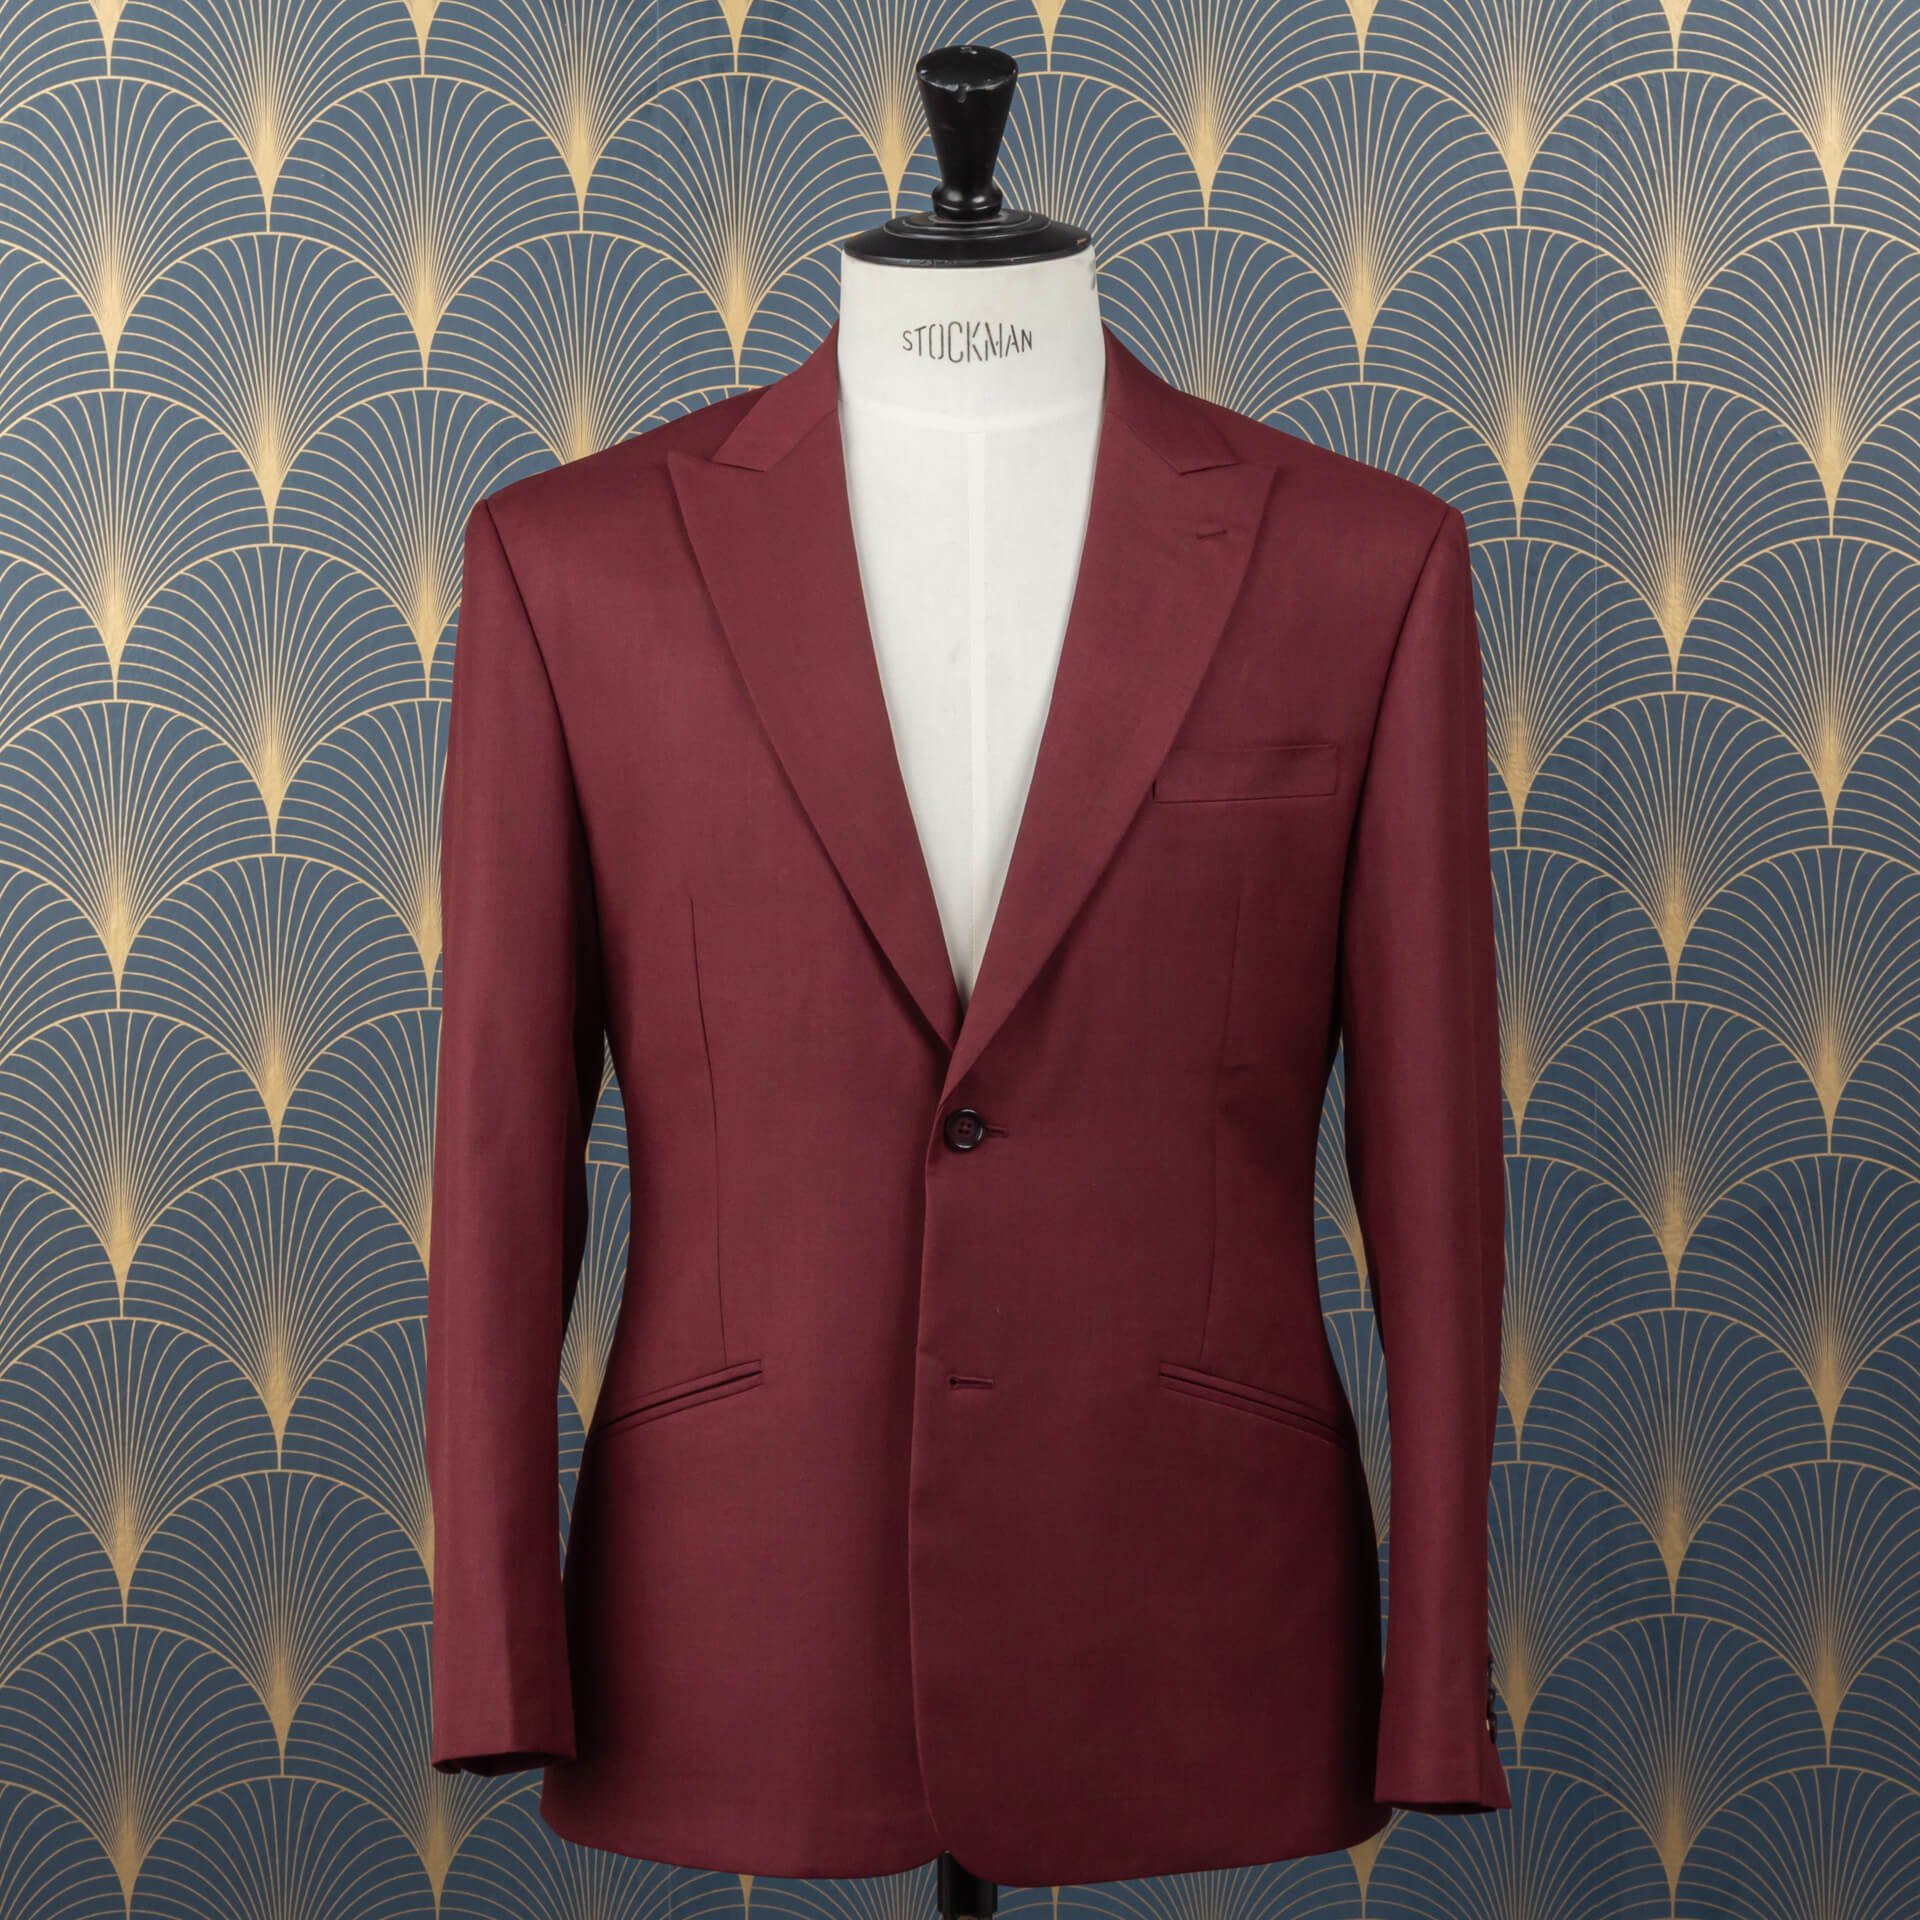 Prontomoda Mens Burgundy Red Striped 100% Merino Wool Regular Fit Suit |  The Suit Depot